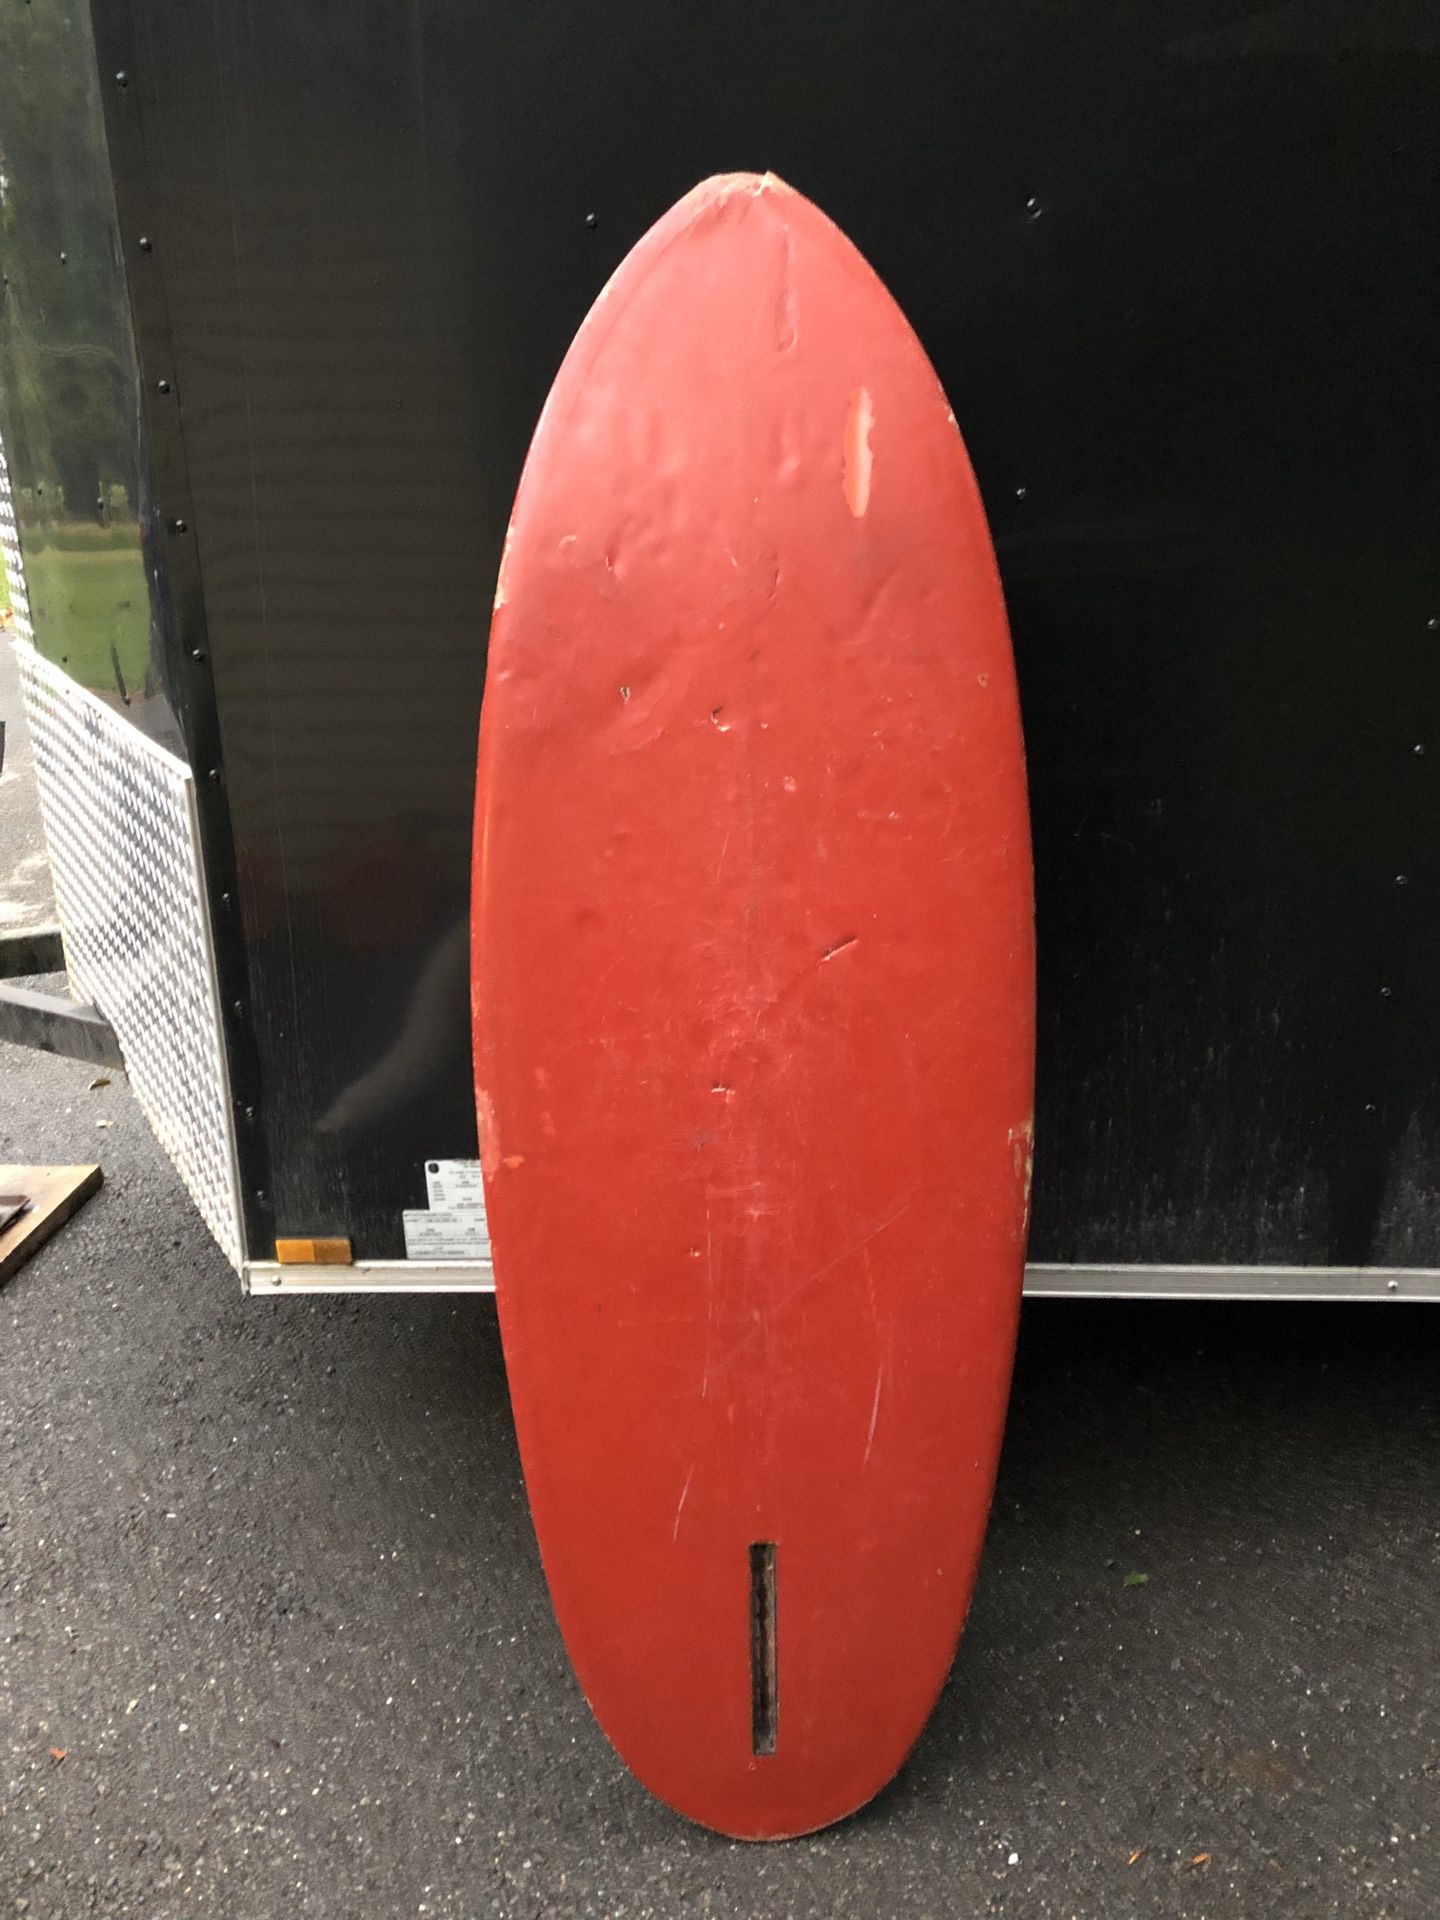 Retro single fin surfboard